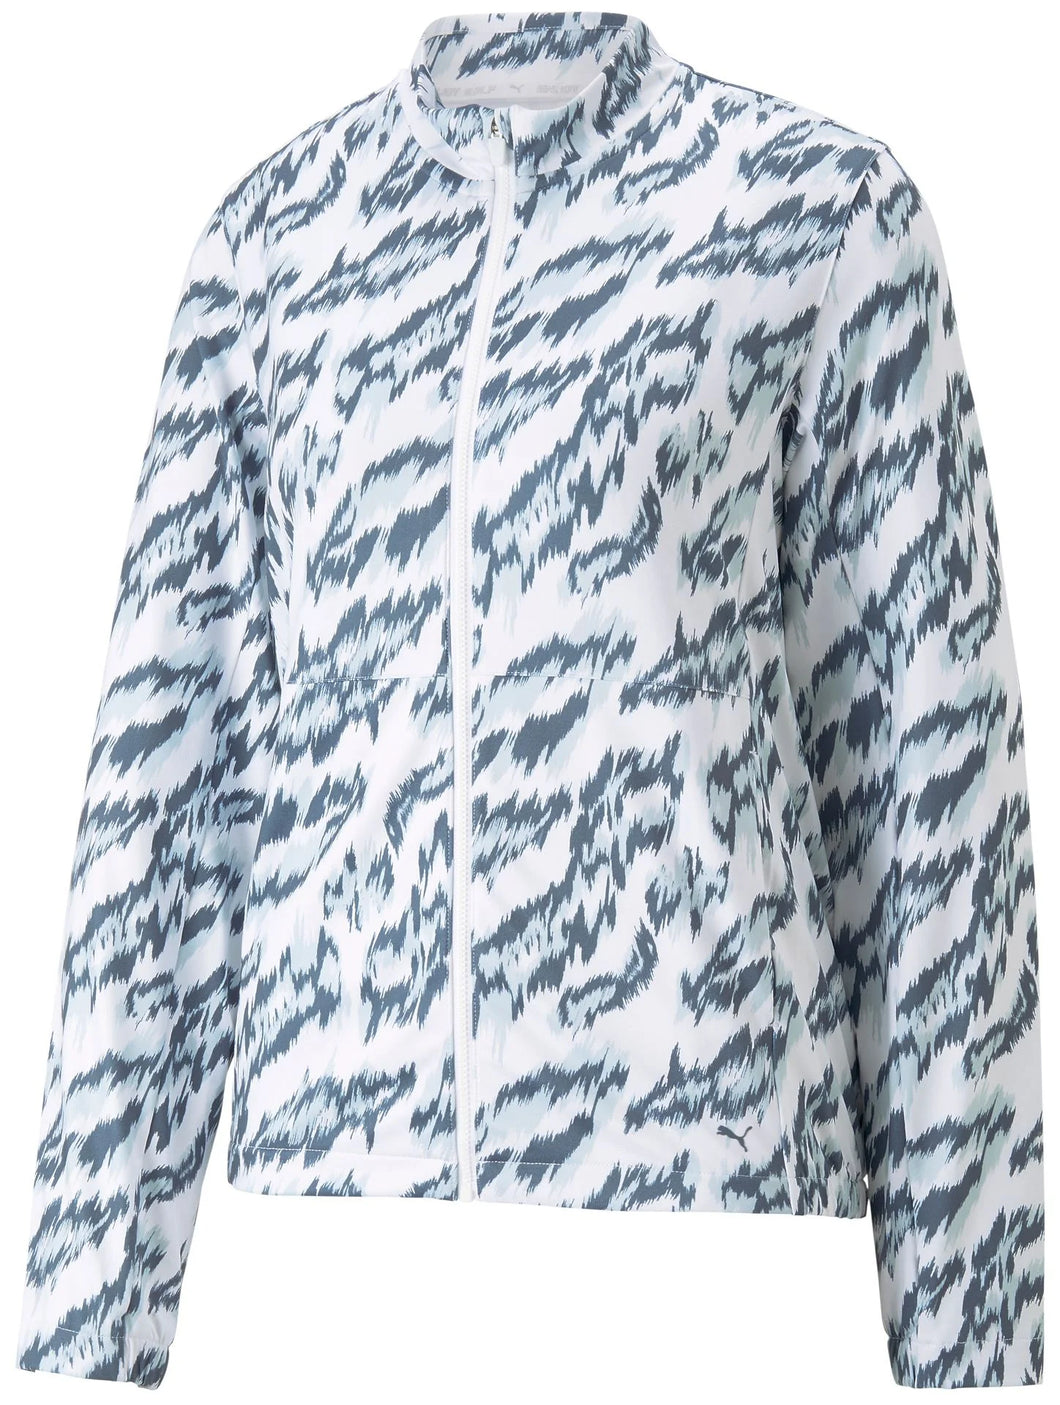 Puma Women's CloudSpun Animal Print Golf Jacket